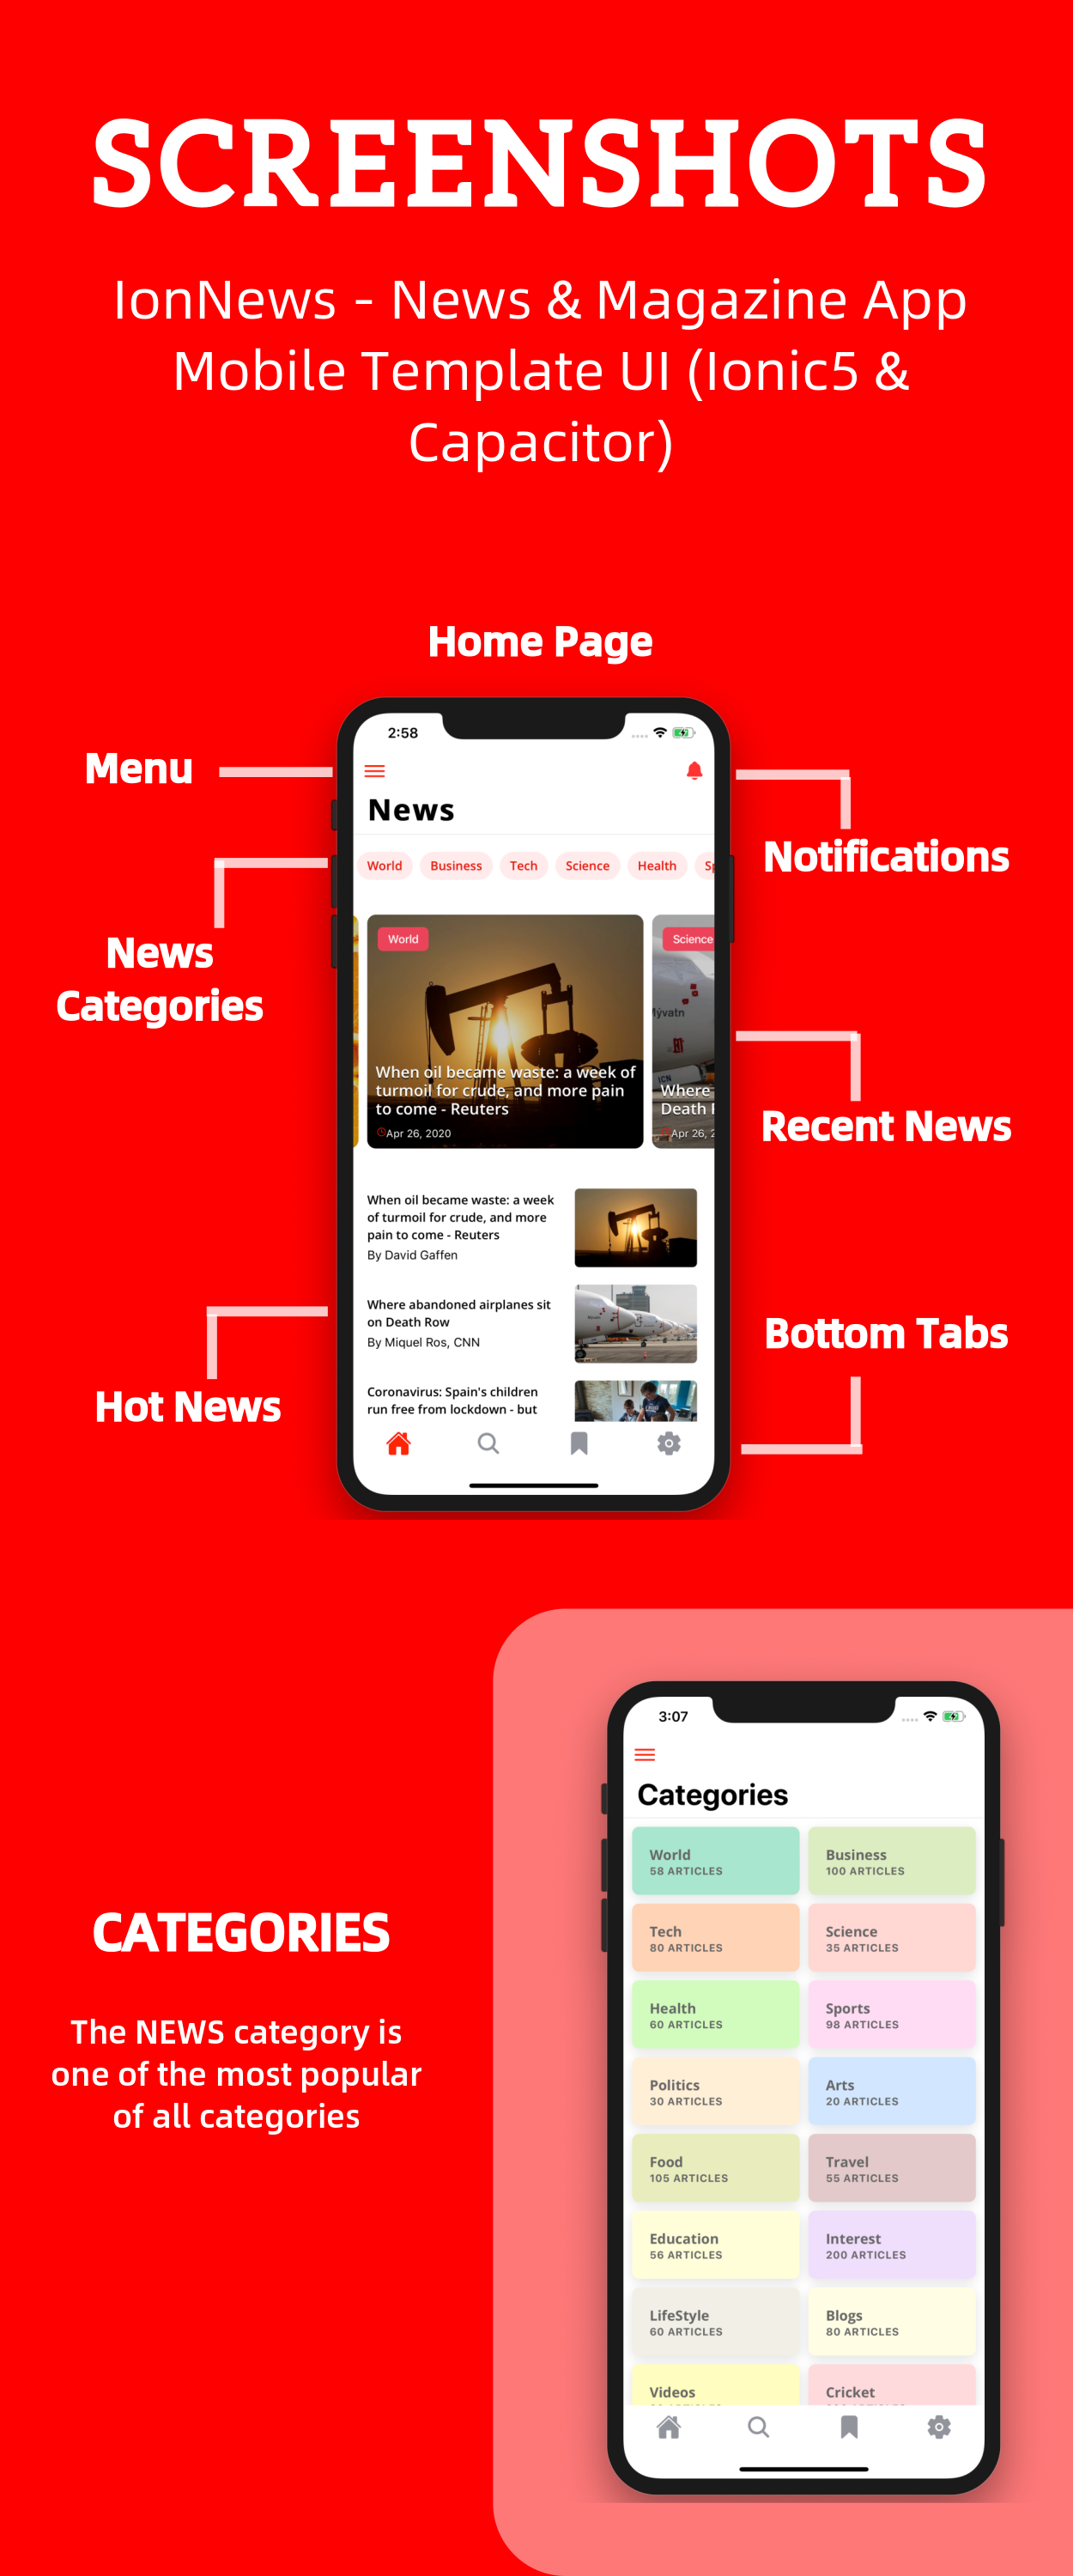 IonNews - News & Magazine App Mobile Template UI (Ionic5 & Capacitor) - 5